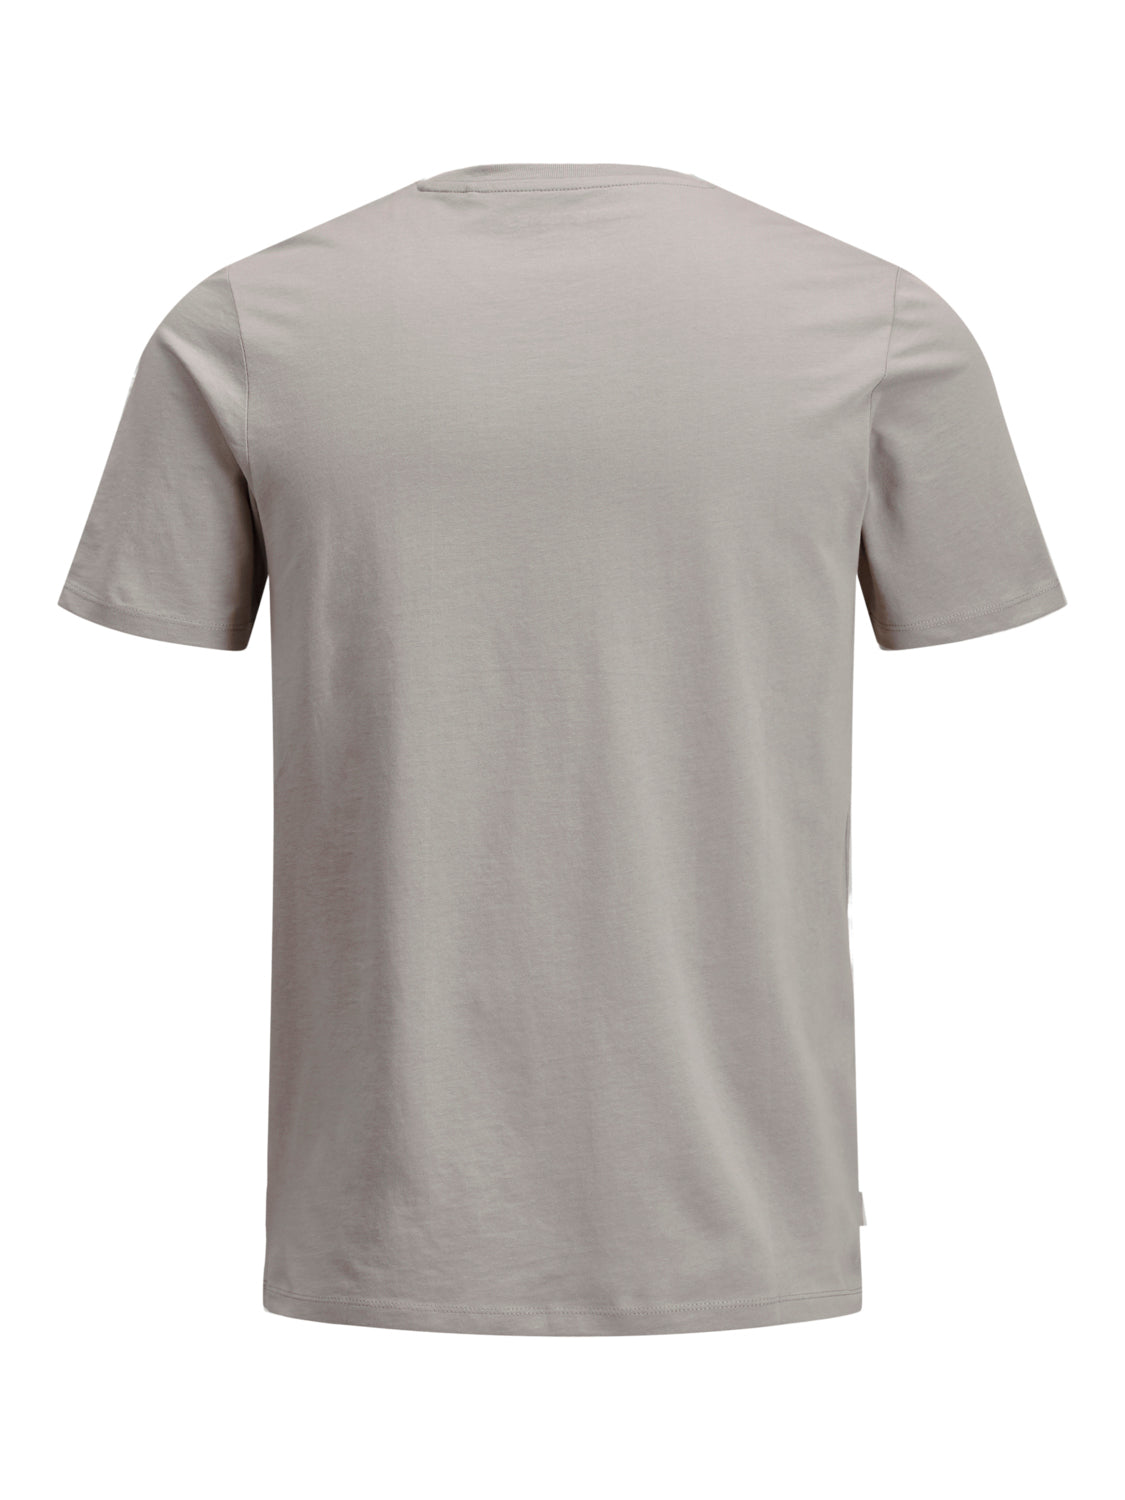 JJEORGANIC T-Shirt - Crockery